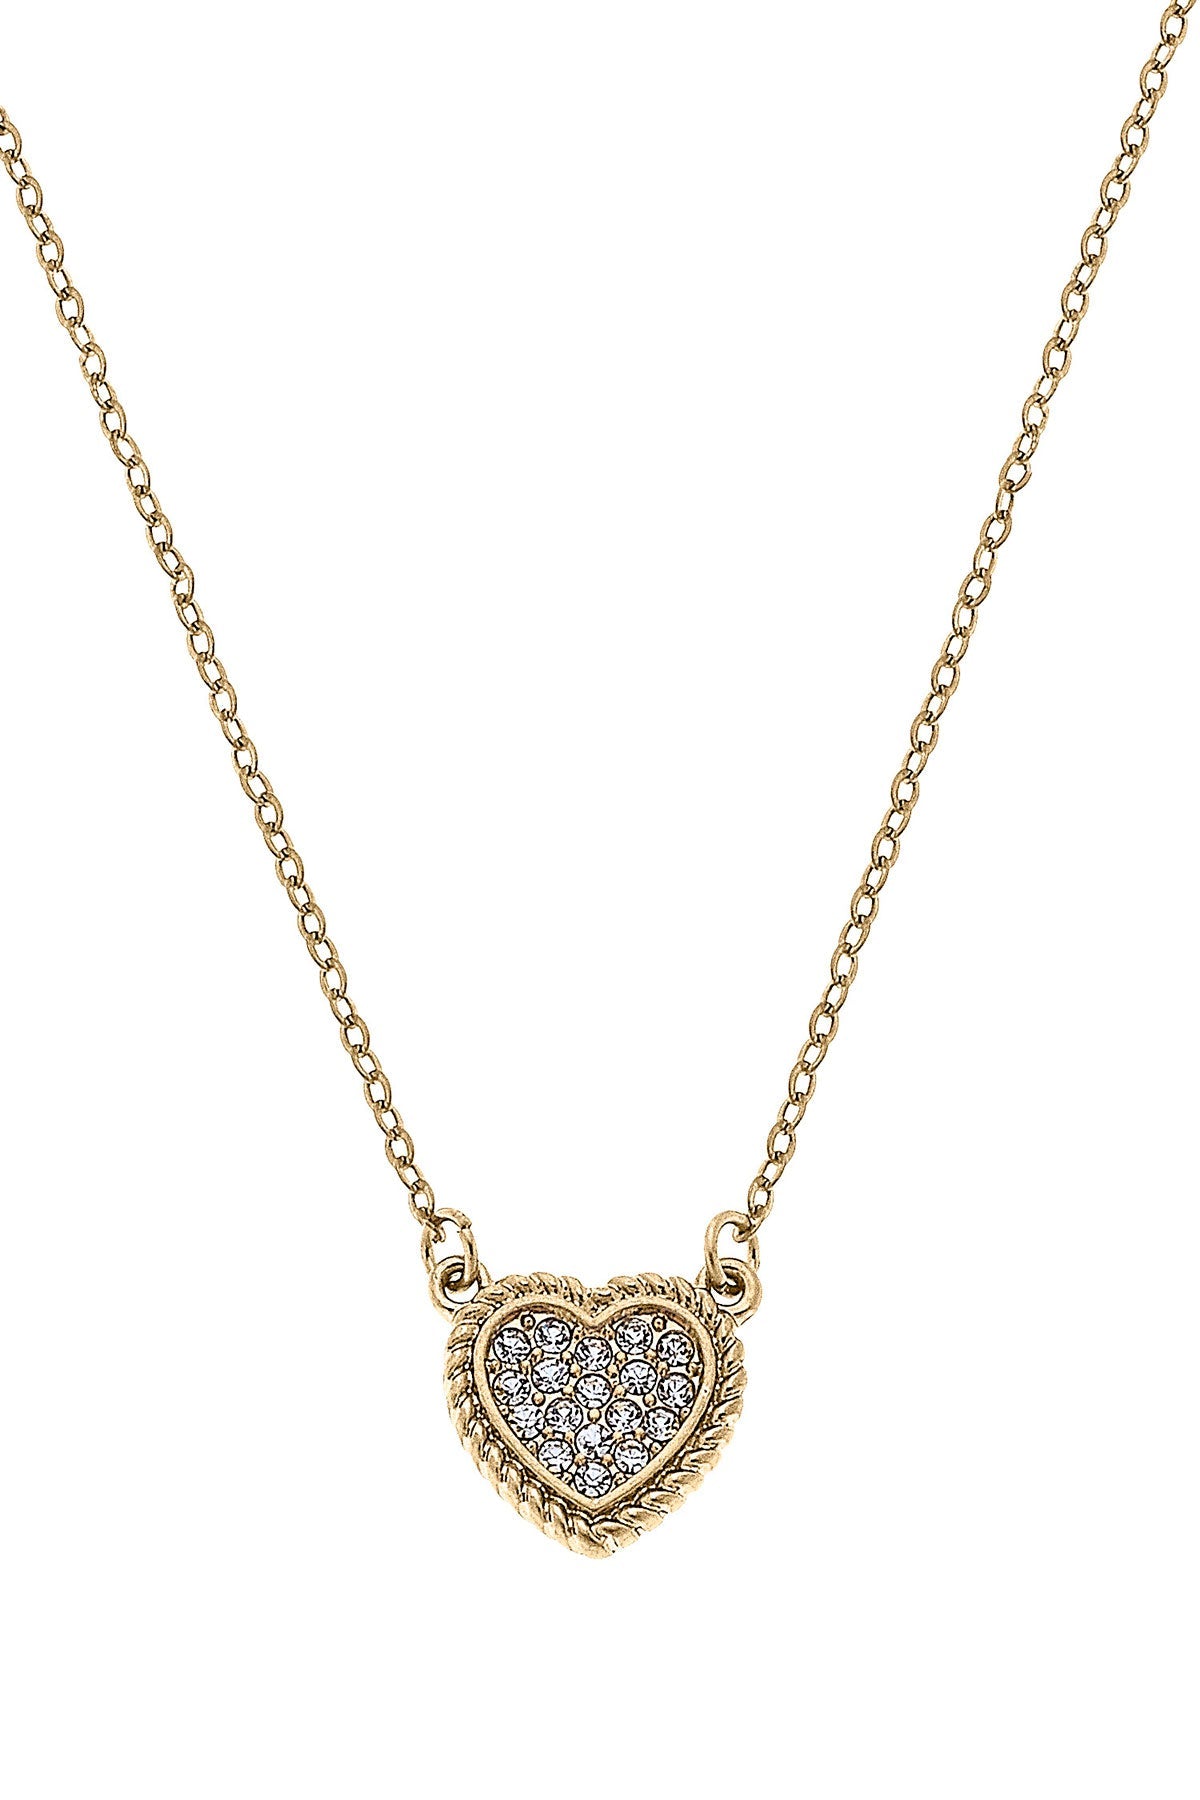 Corrine PavÃ© Heart Charm Necklace in Worn Gold